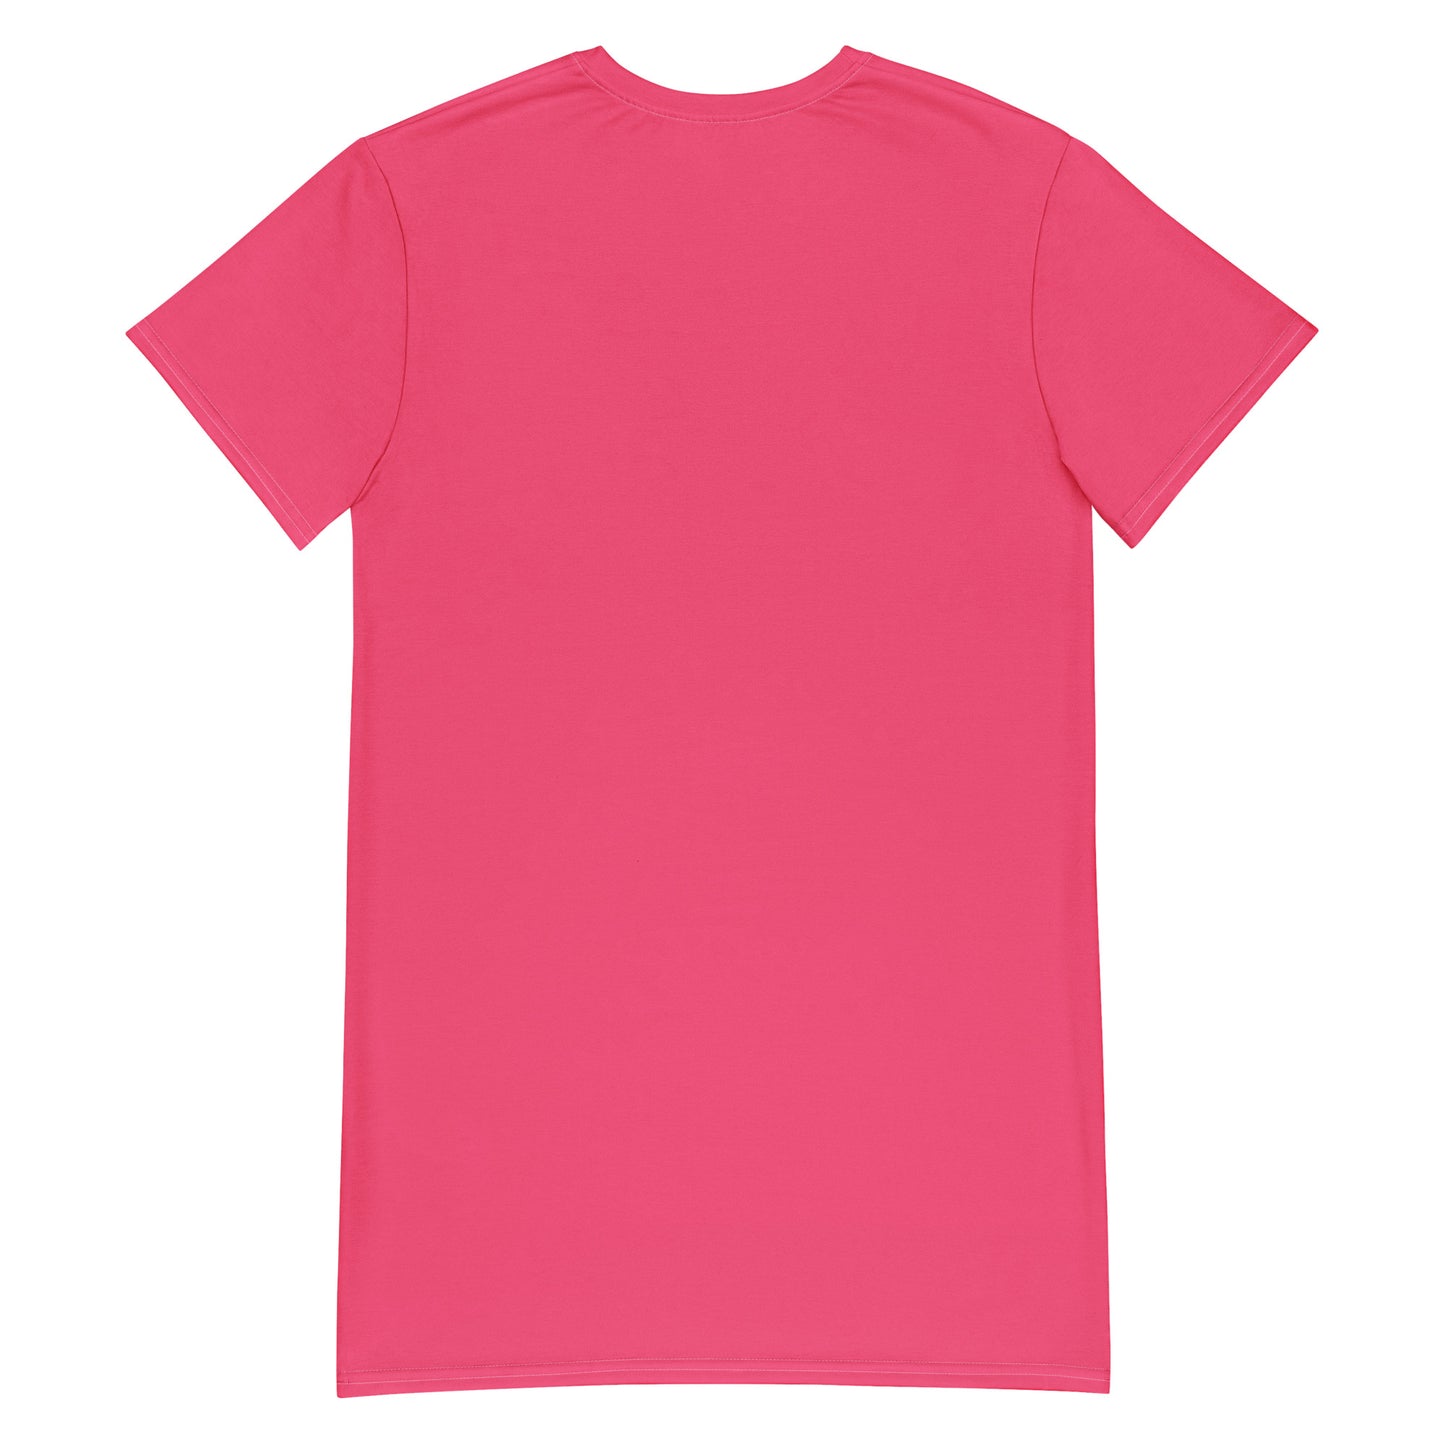 T-shirt Dress: I Love Me Sooo Much (dark pink)